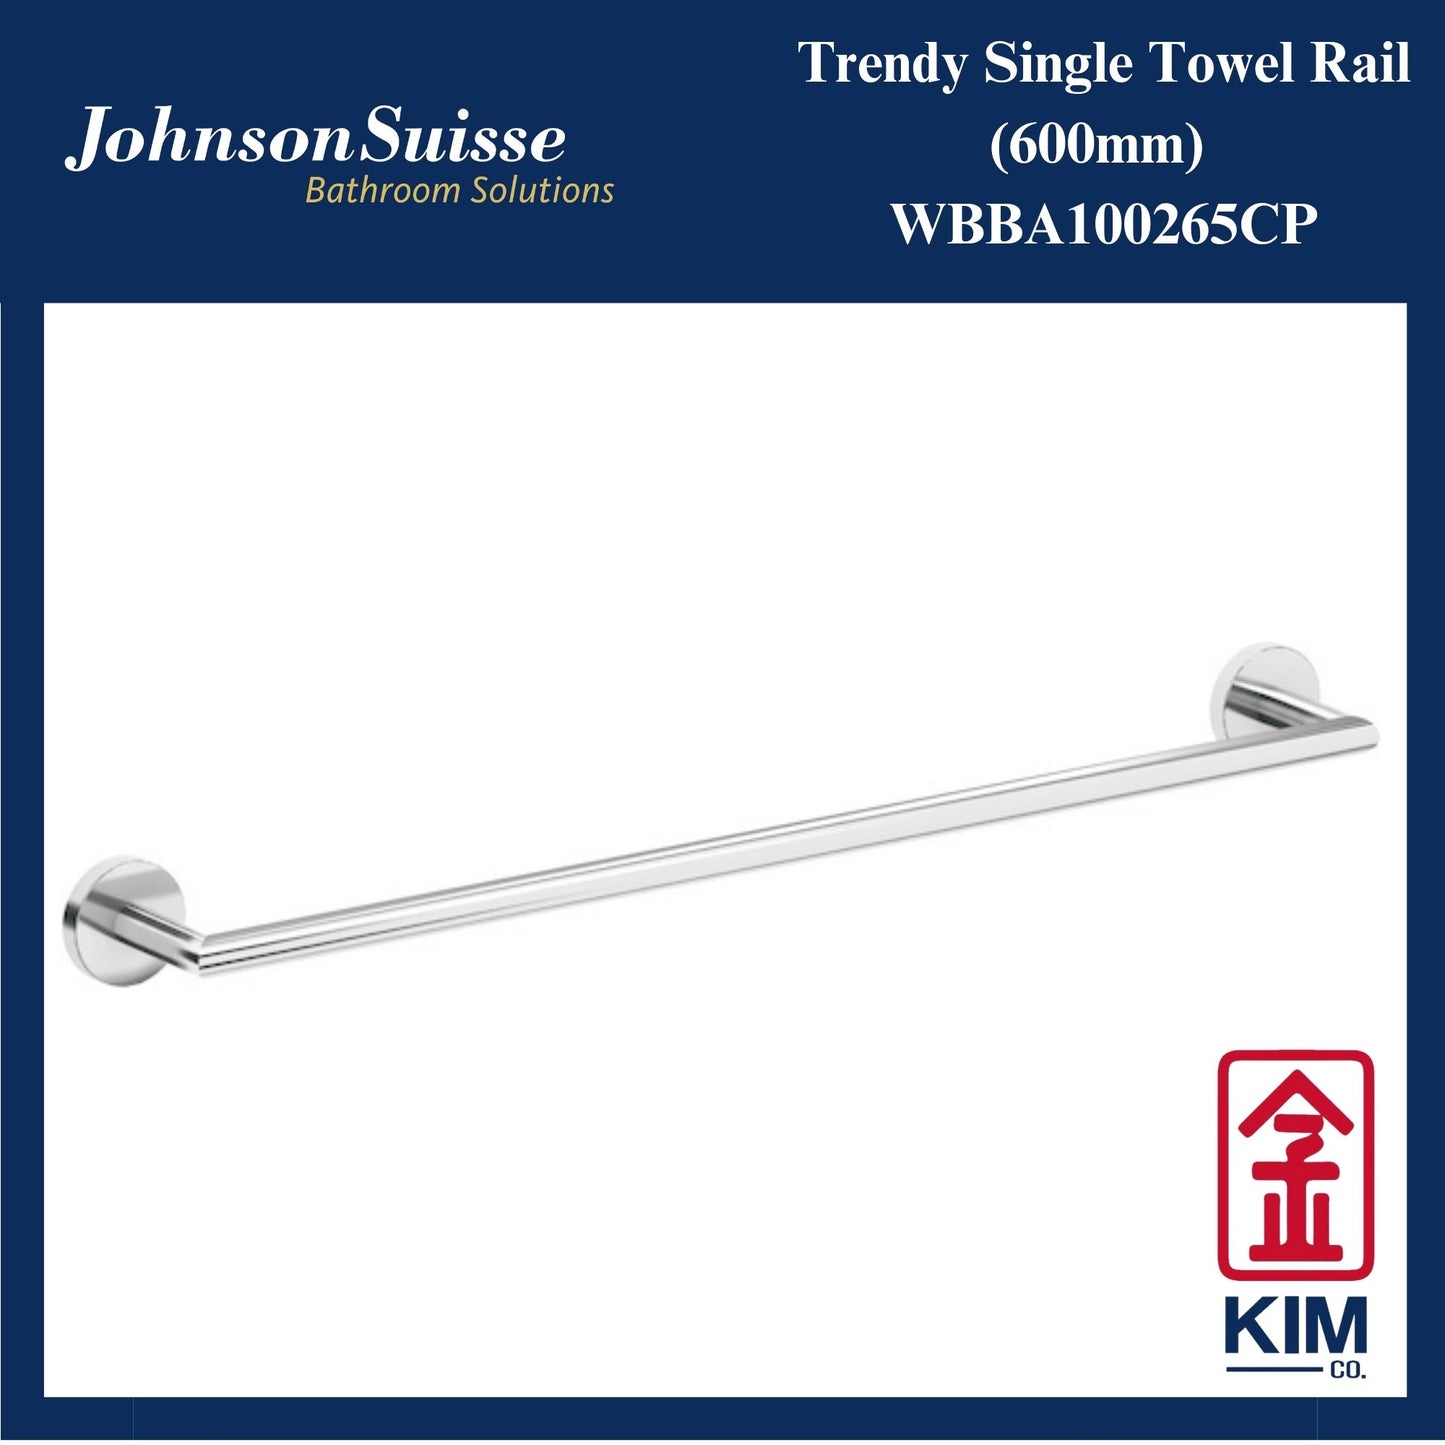 Johnson Suisse Trendy Towel Rail (WBBA100265CP)